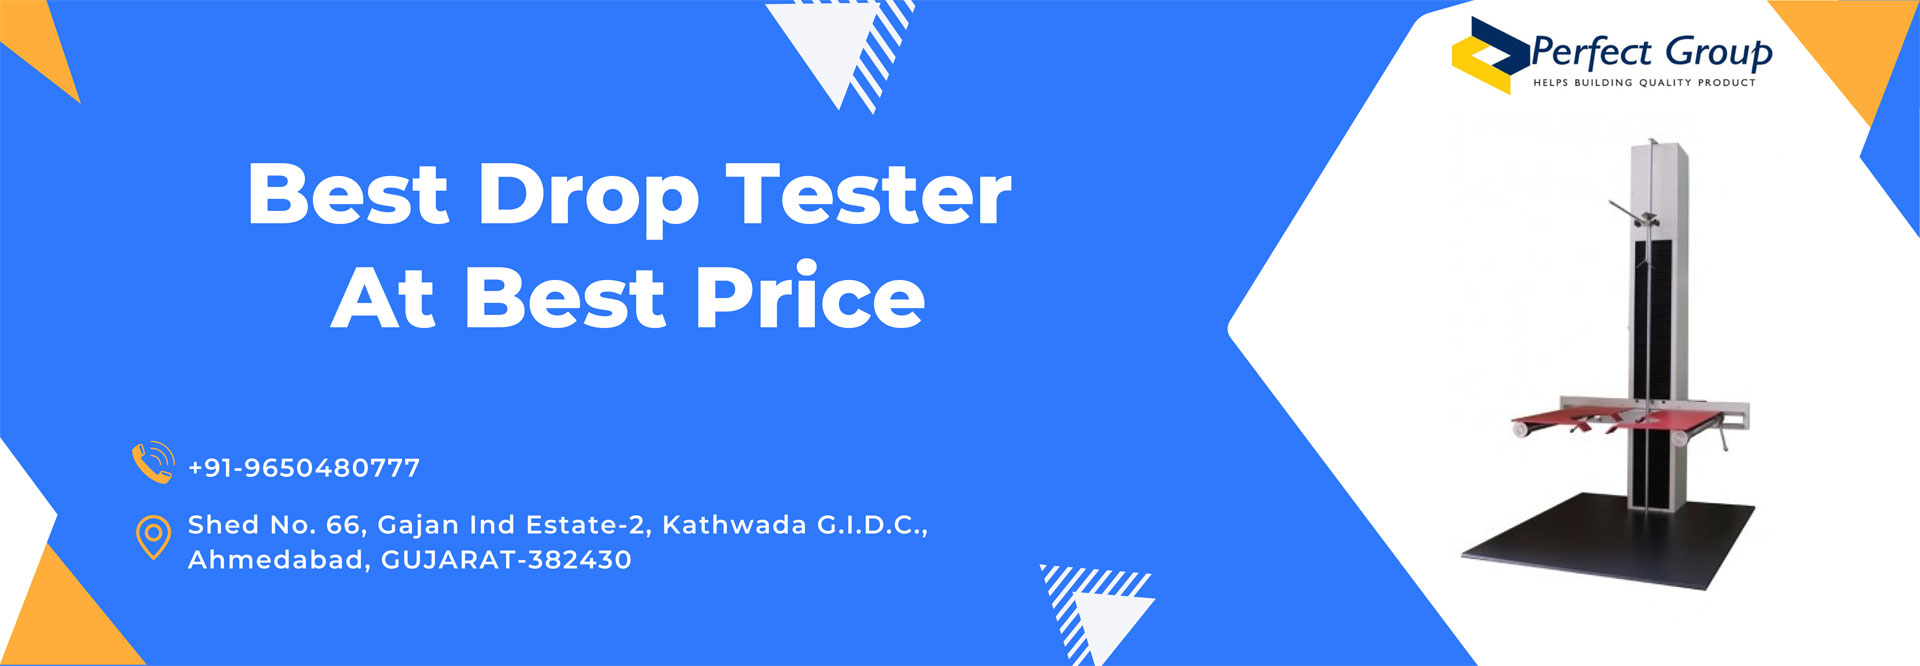 Best Drop Tester At Best Price